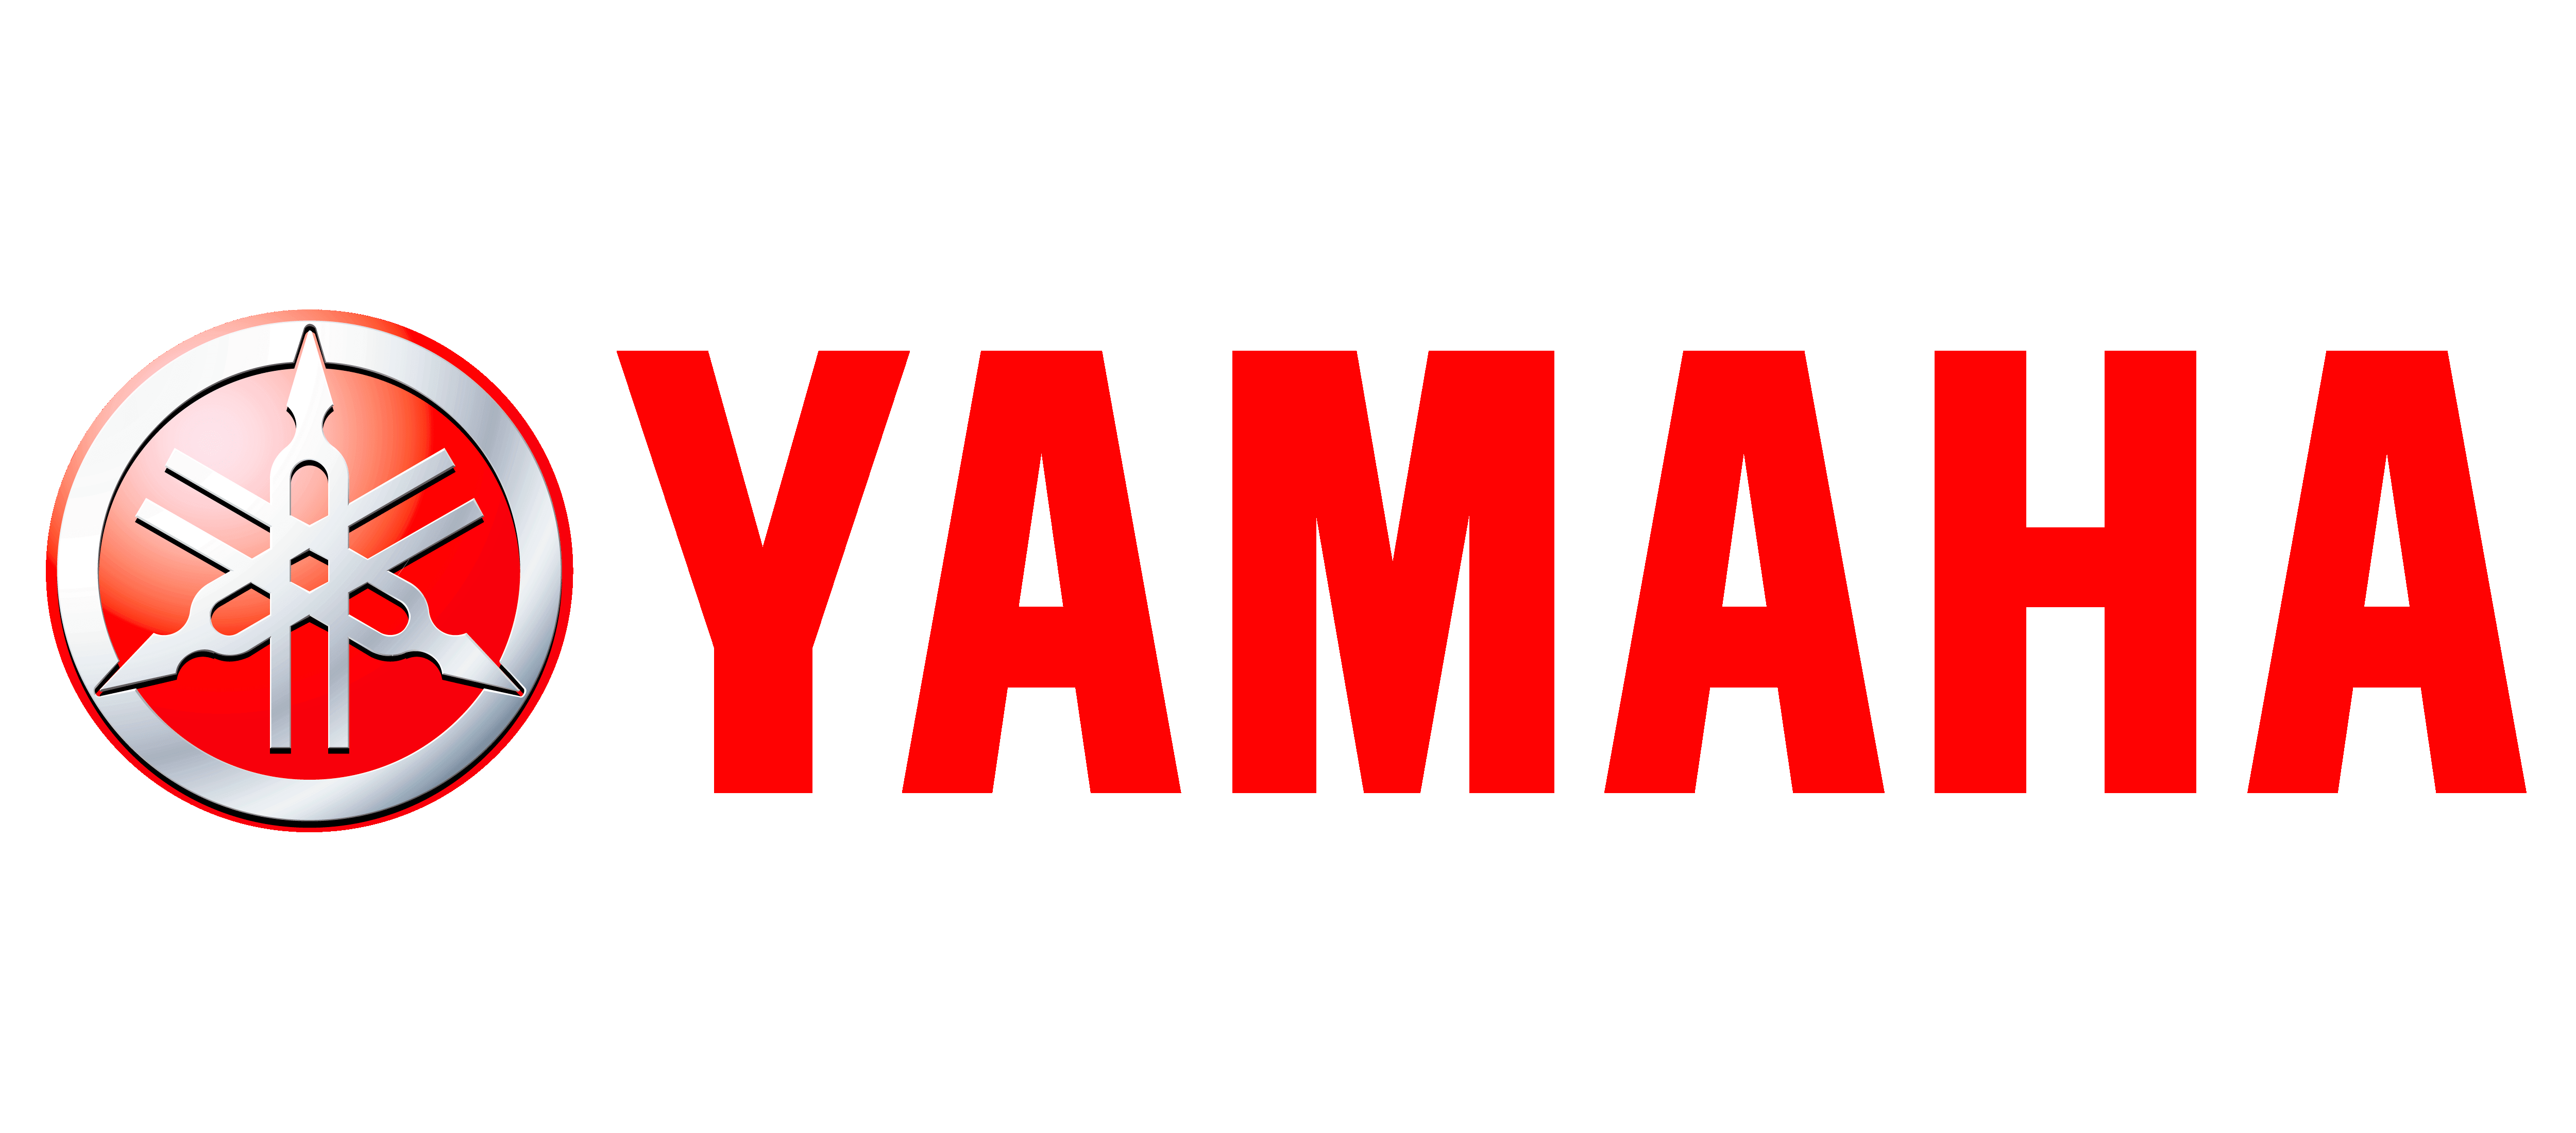 Information About The Company Yamaha   Yamaha Png - Backus Johnston, Transparent background PNG HD thumbnail